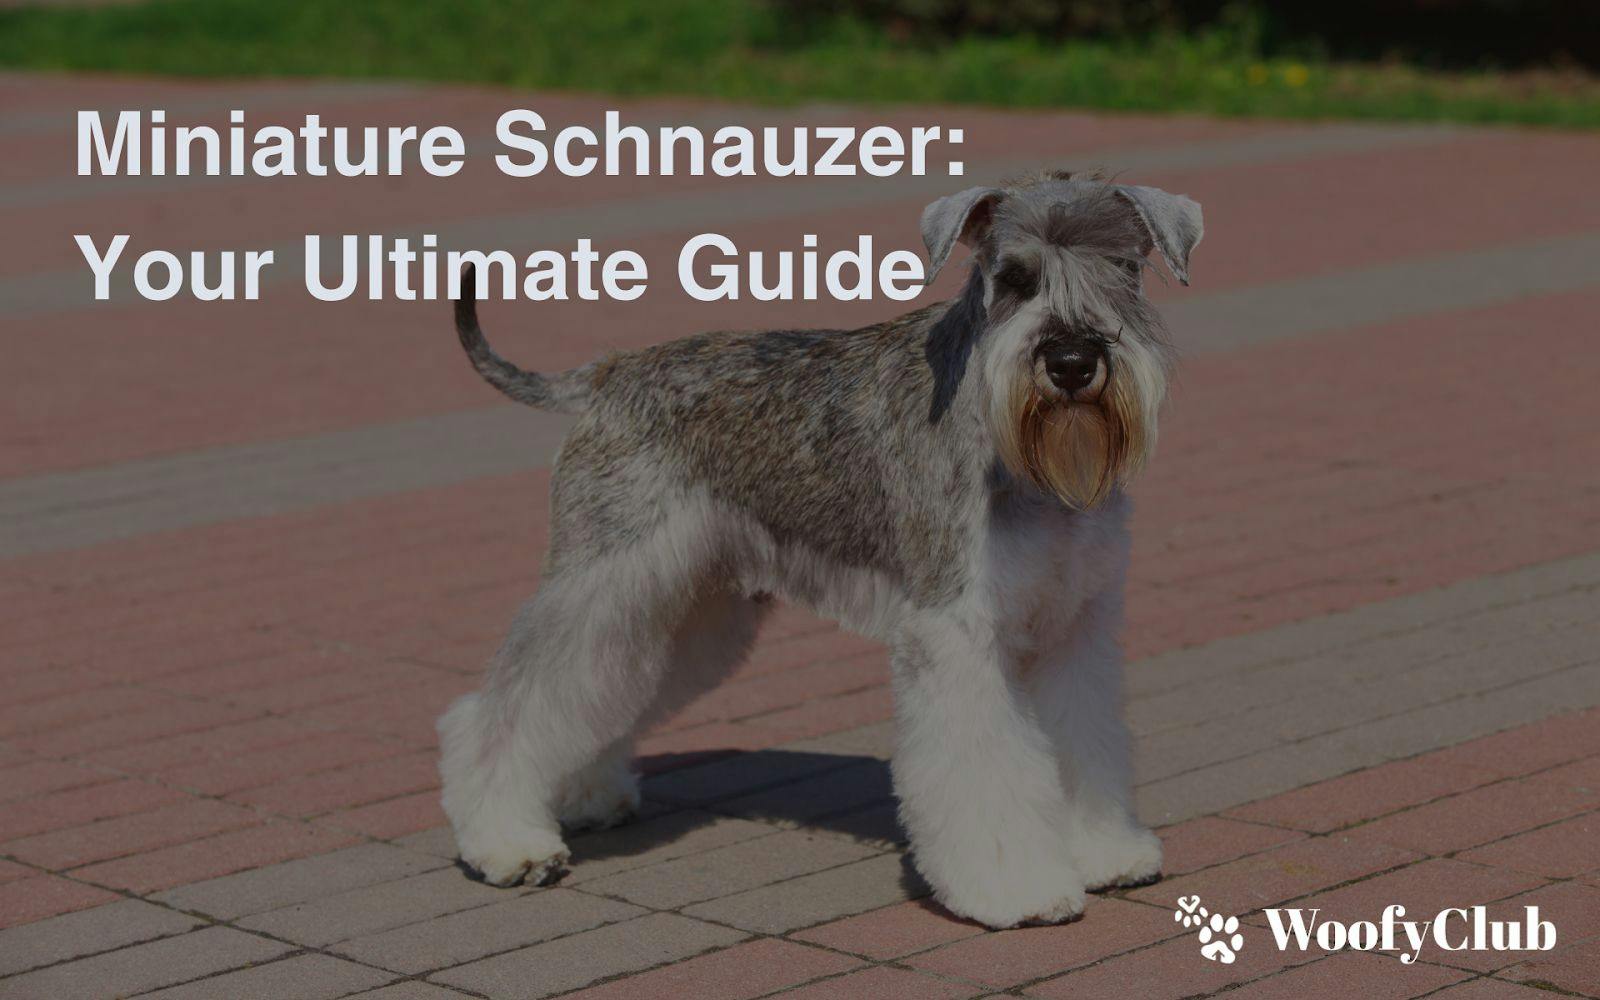 Miniature Schnauzer: Your Ultimate Guide